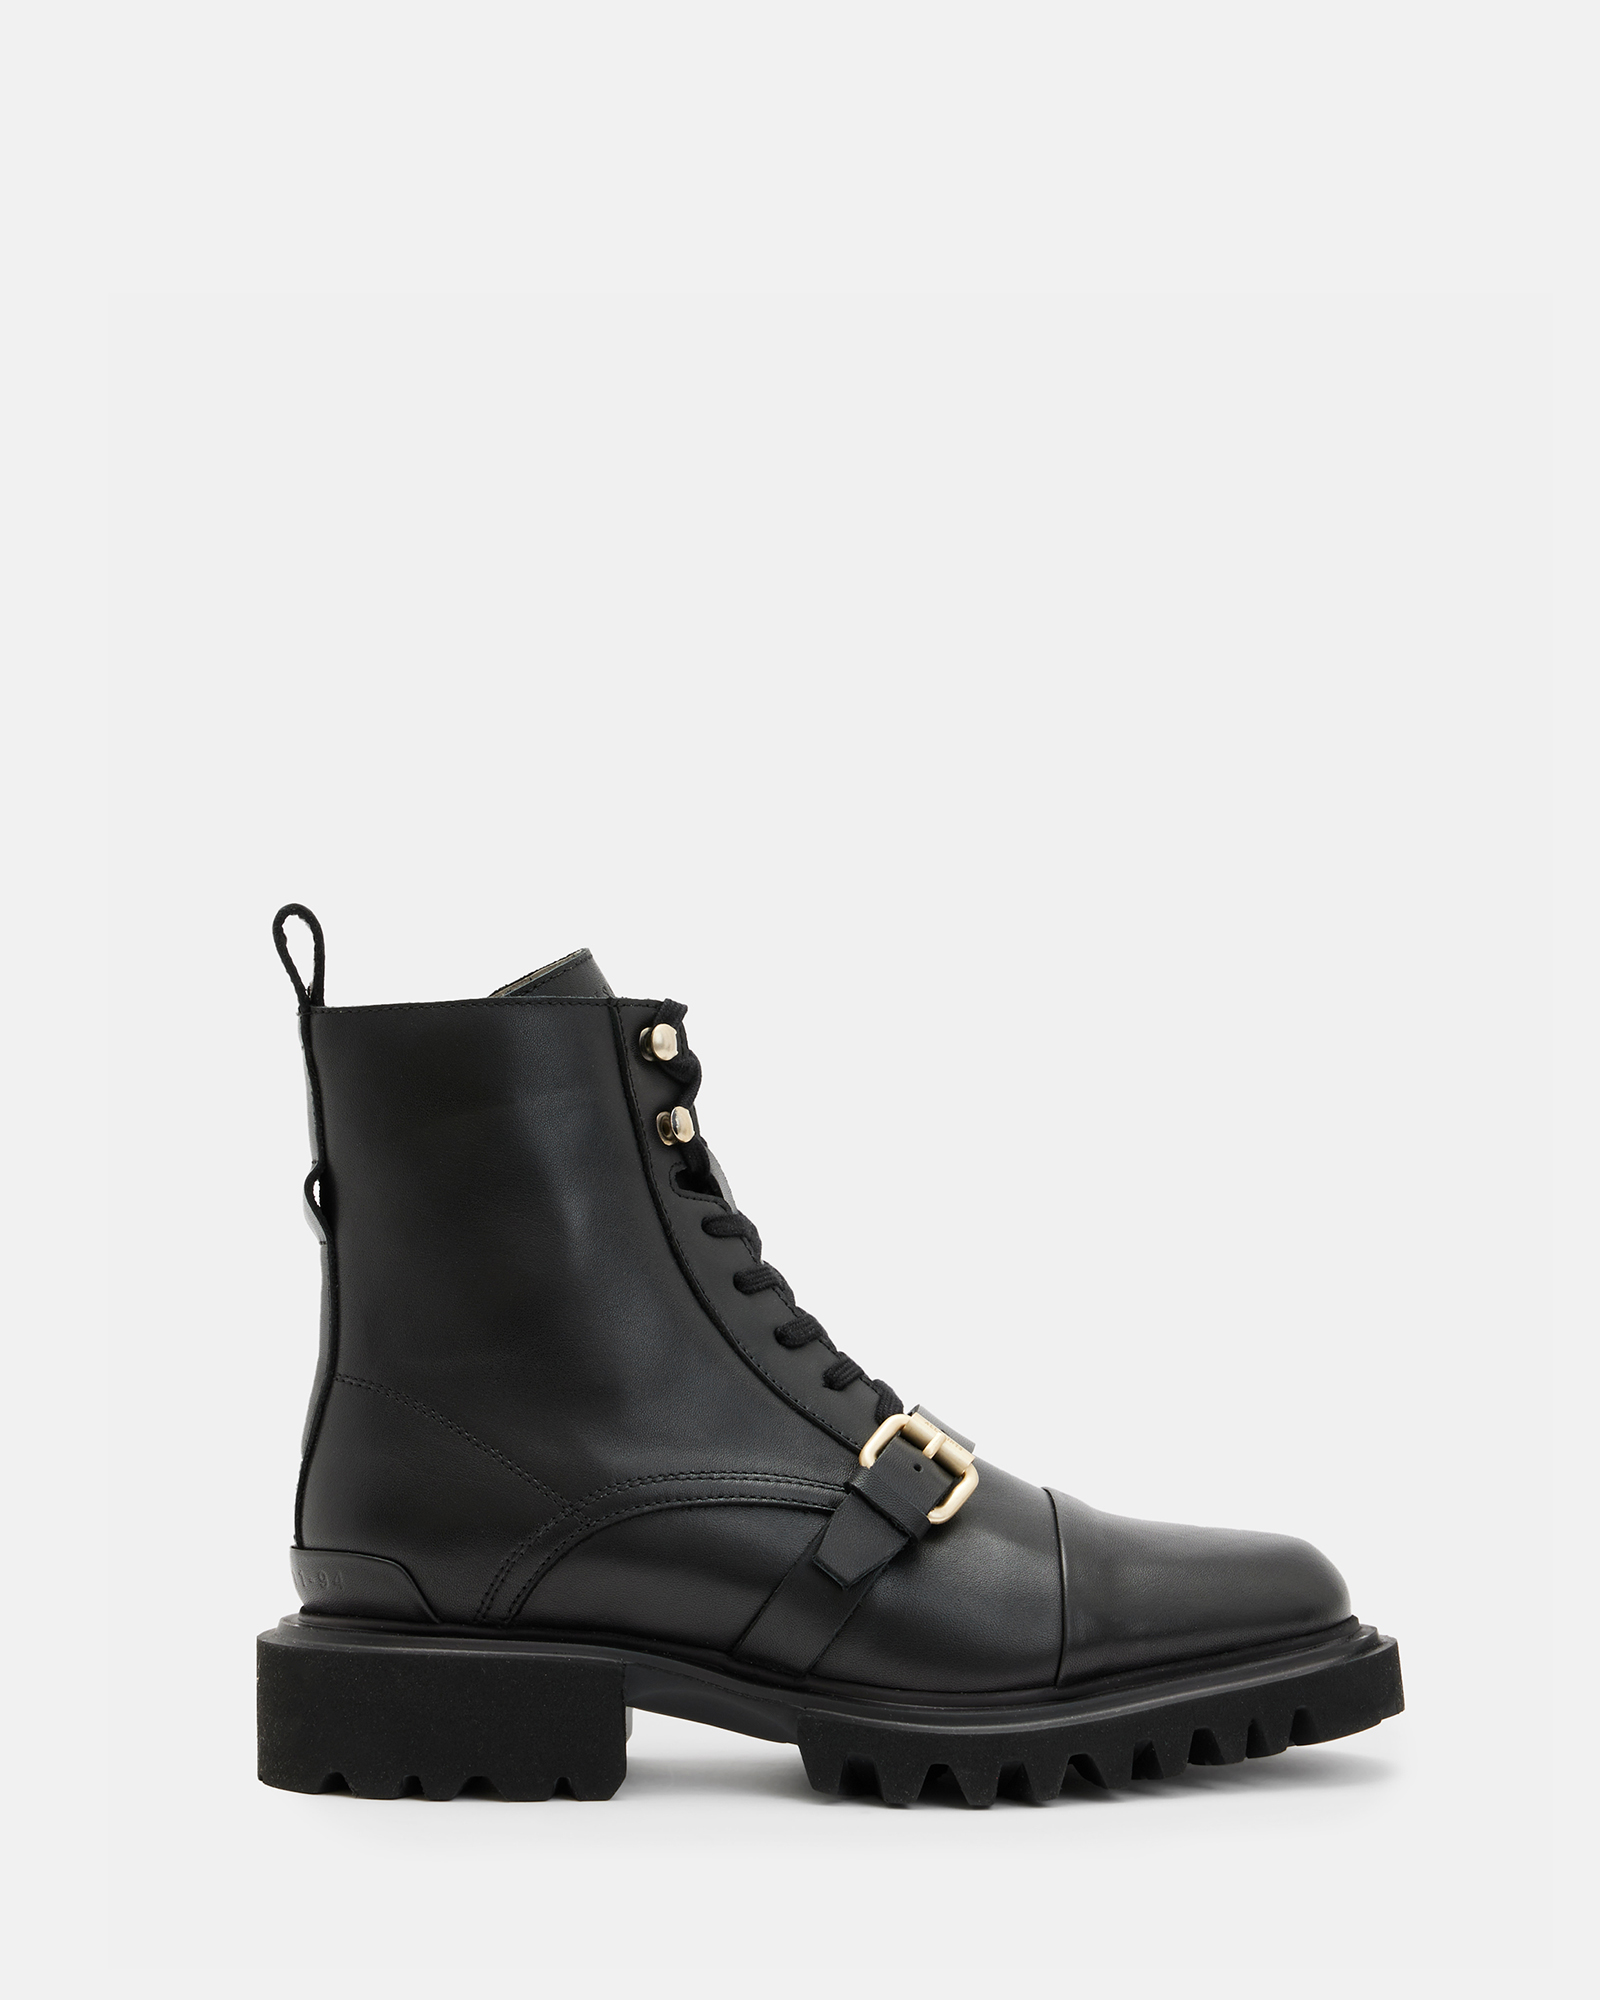 AllSaints Tori Leather Boots,, Black